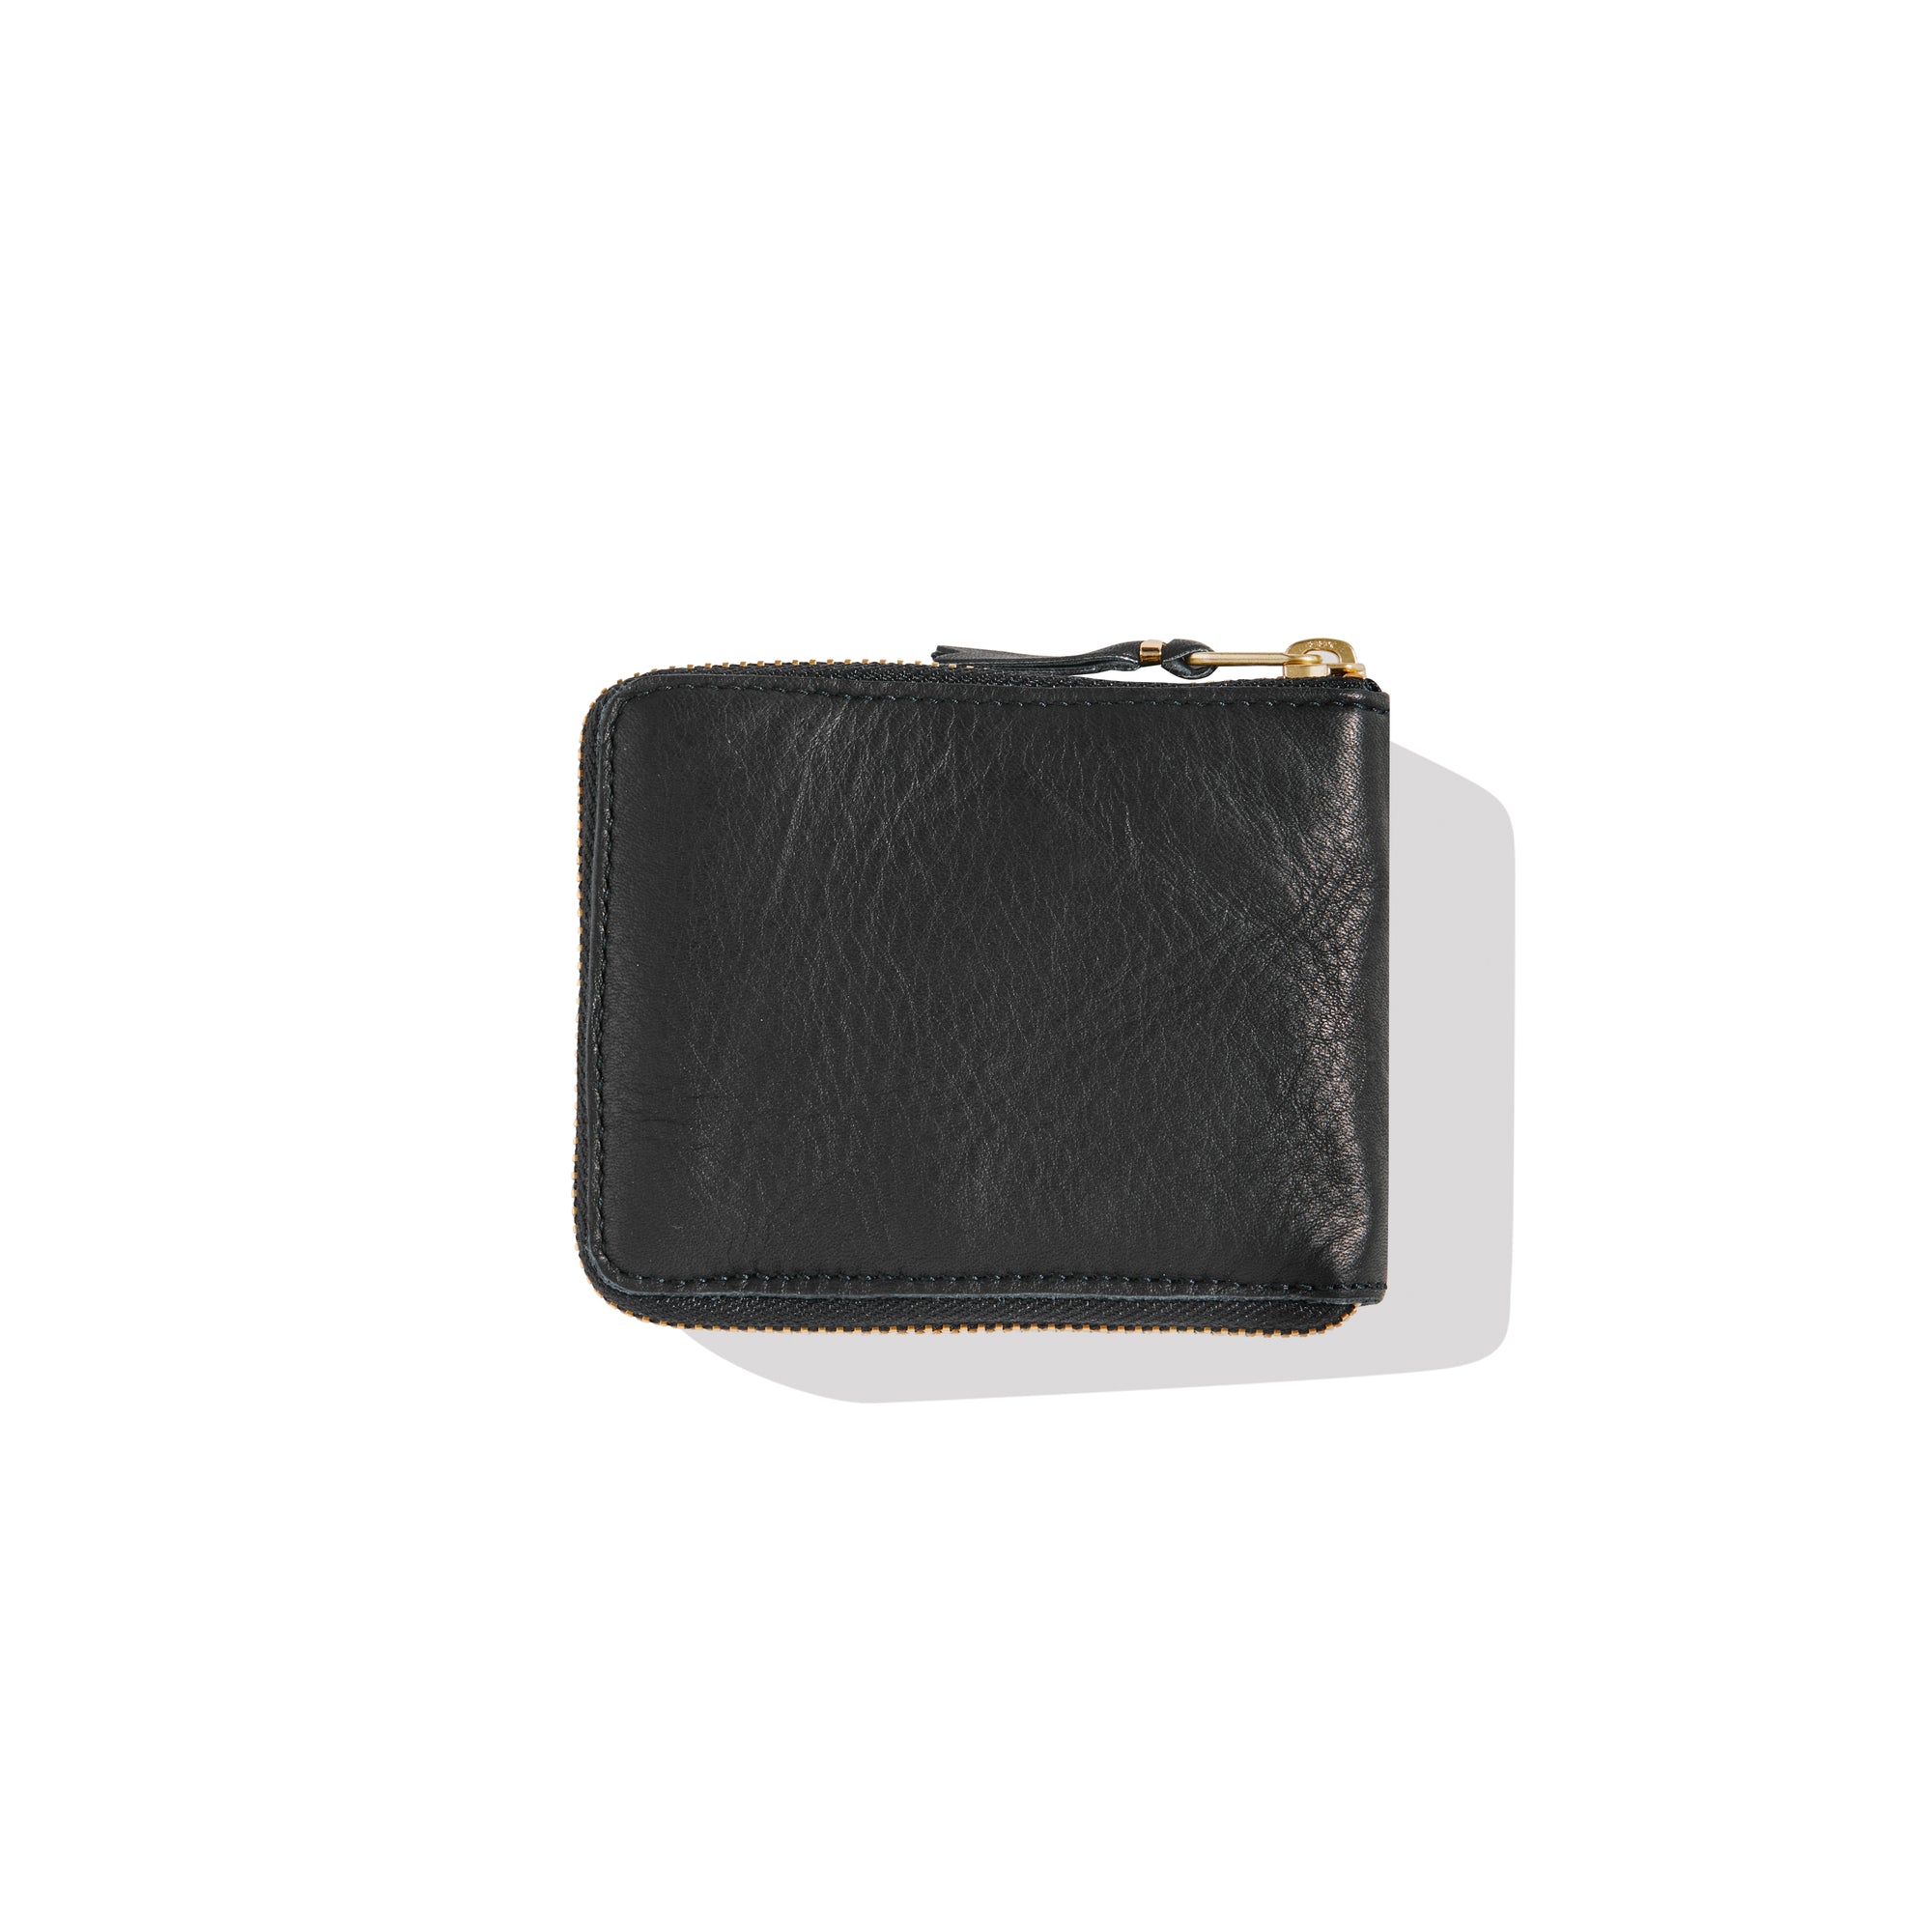 CDG Wallet - Washed Full Zip Around Wallet - (Black) 7100 view 2